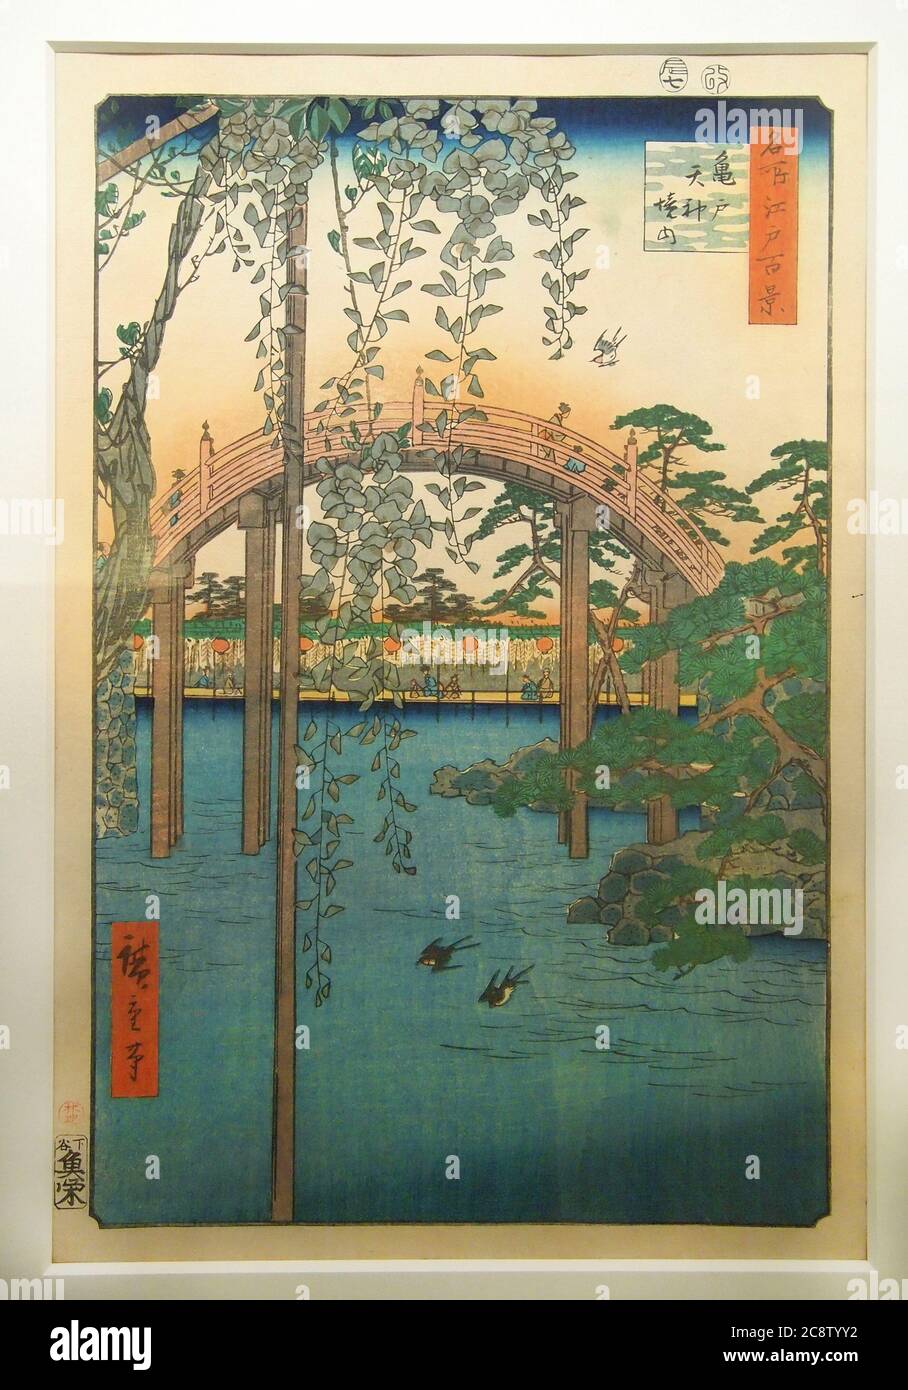 Utagawa Hiroshige. Bridge in Garden (1858). Drum bridge and garden at Kameido Tenjin Shrine (Tokyo). Flowering wisteria indicates summer season. Stock Photo